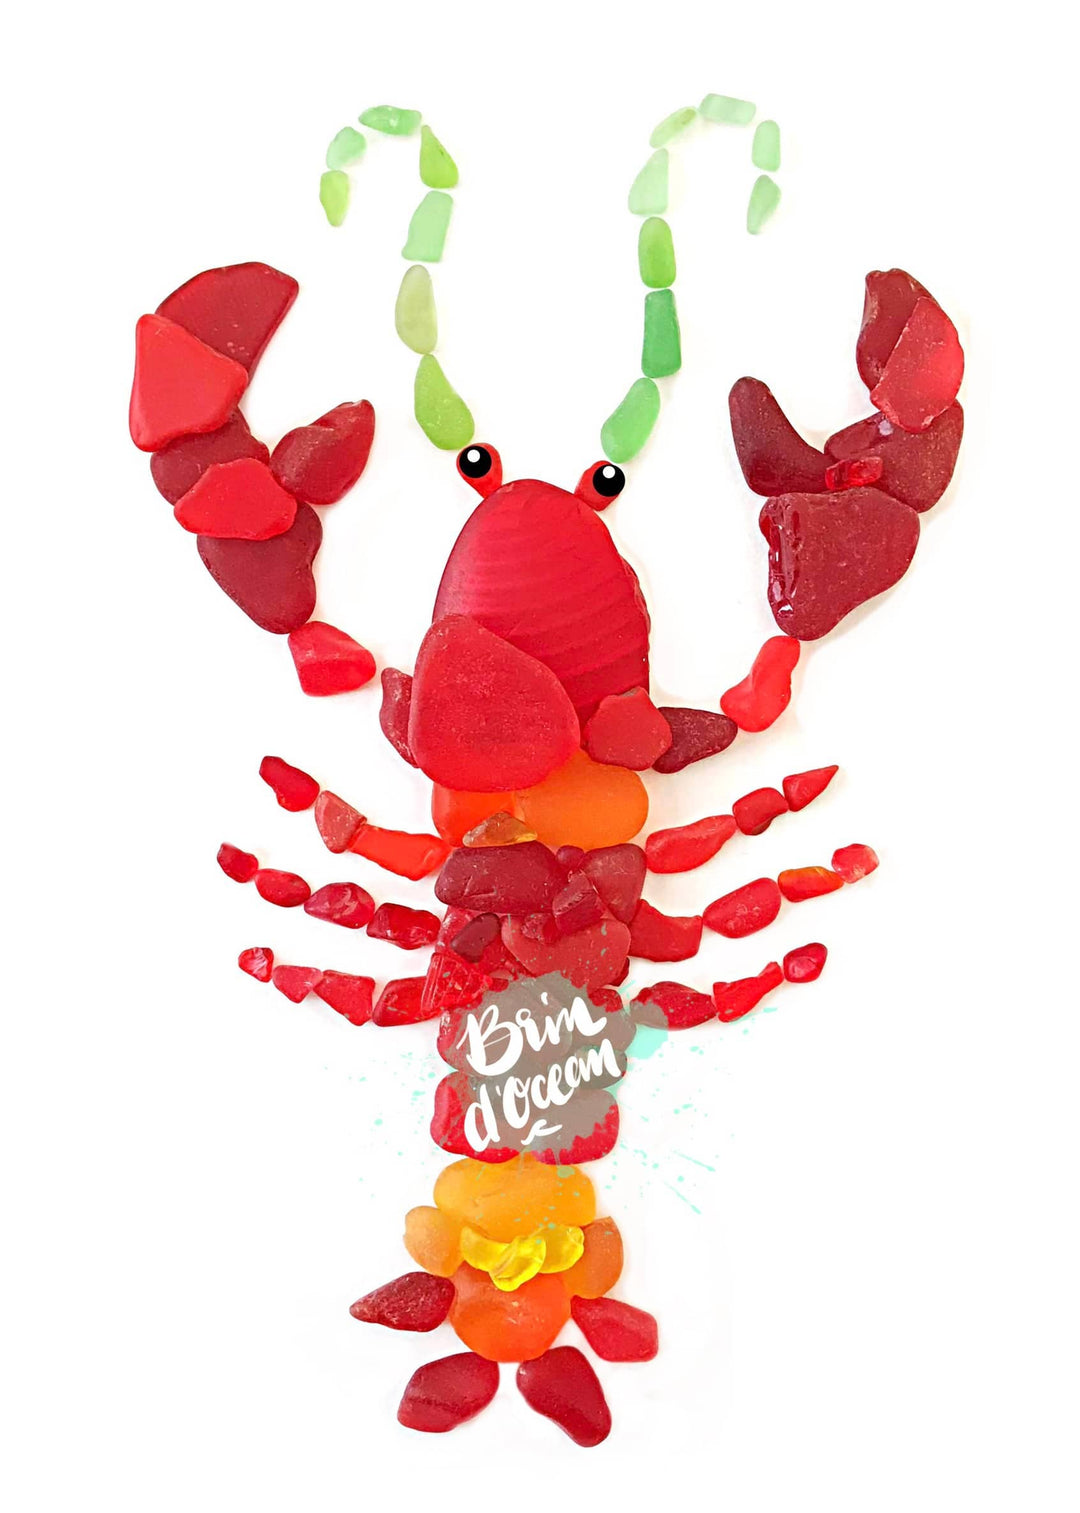 Brin d’Ocean - Lobster Sea Glass Greeting card, Orca, Red Lobster